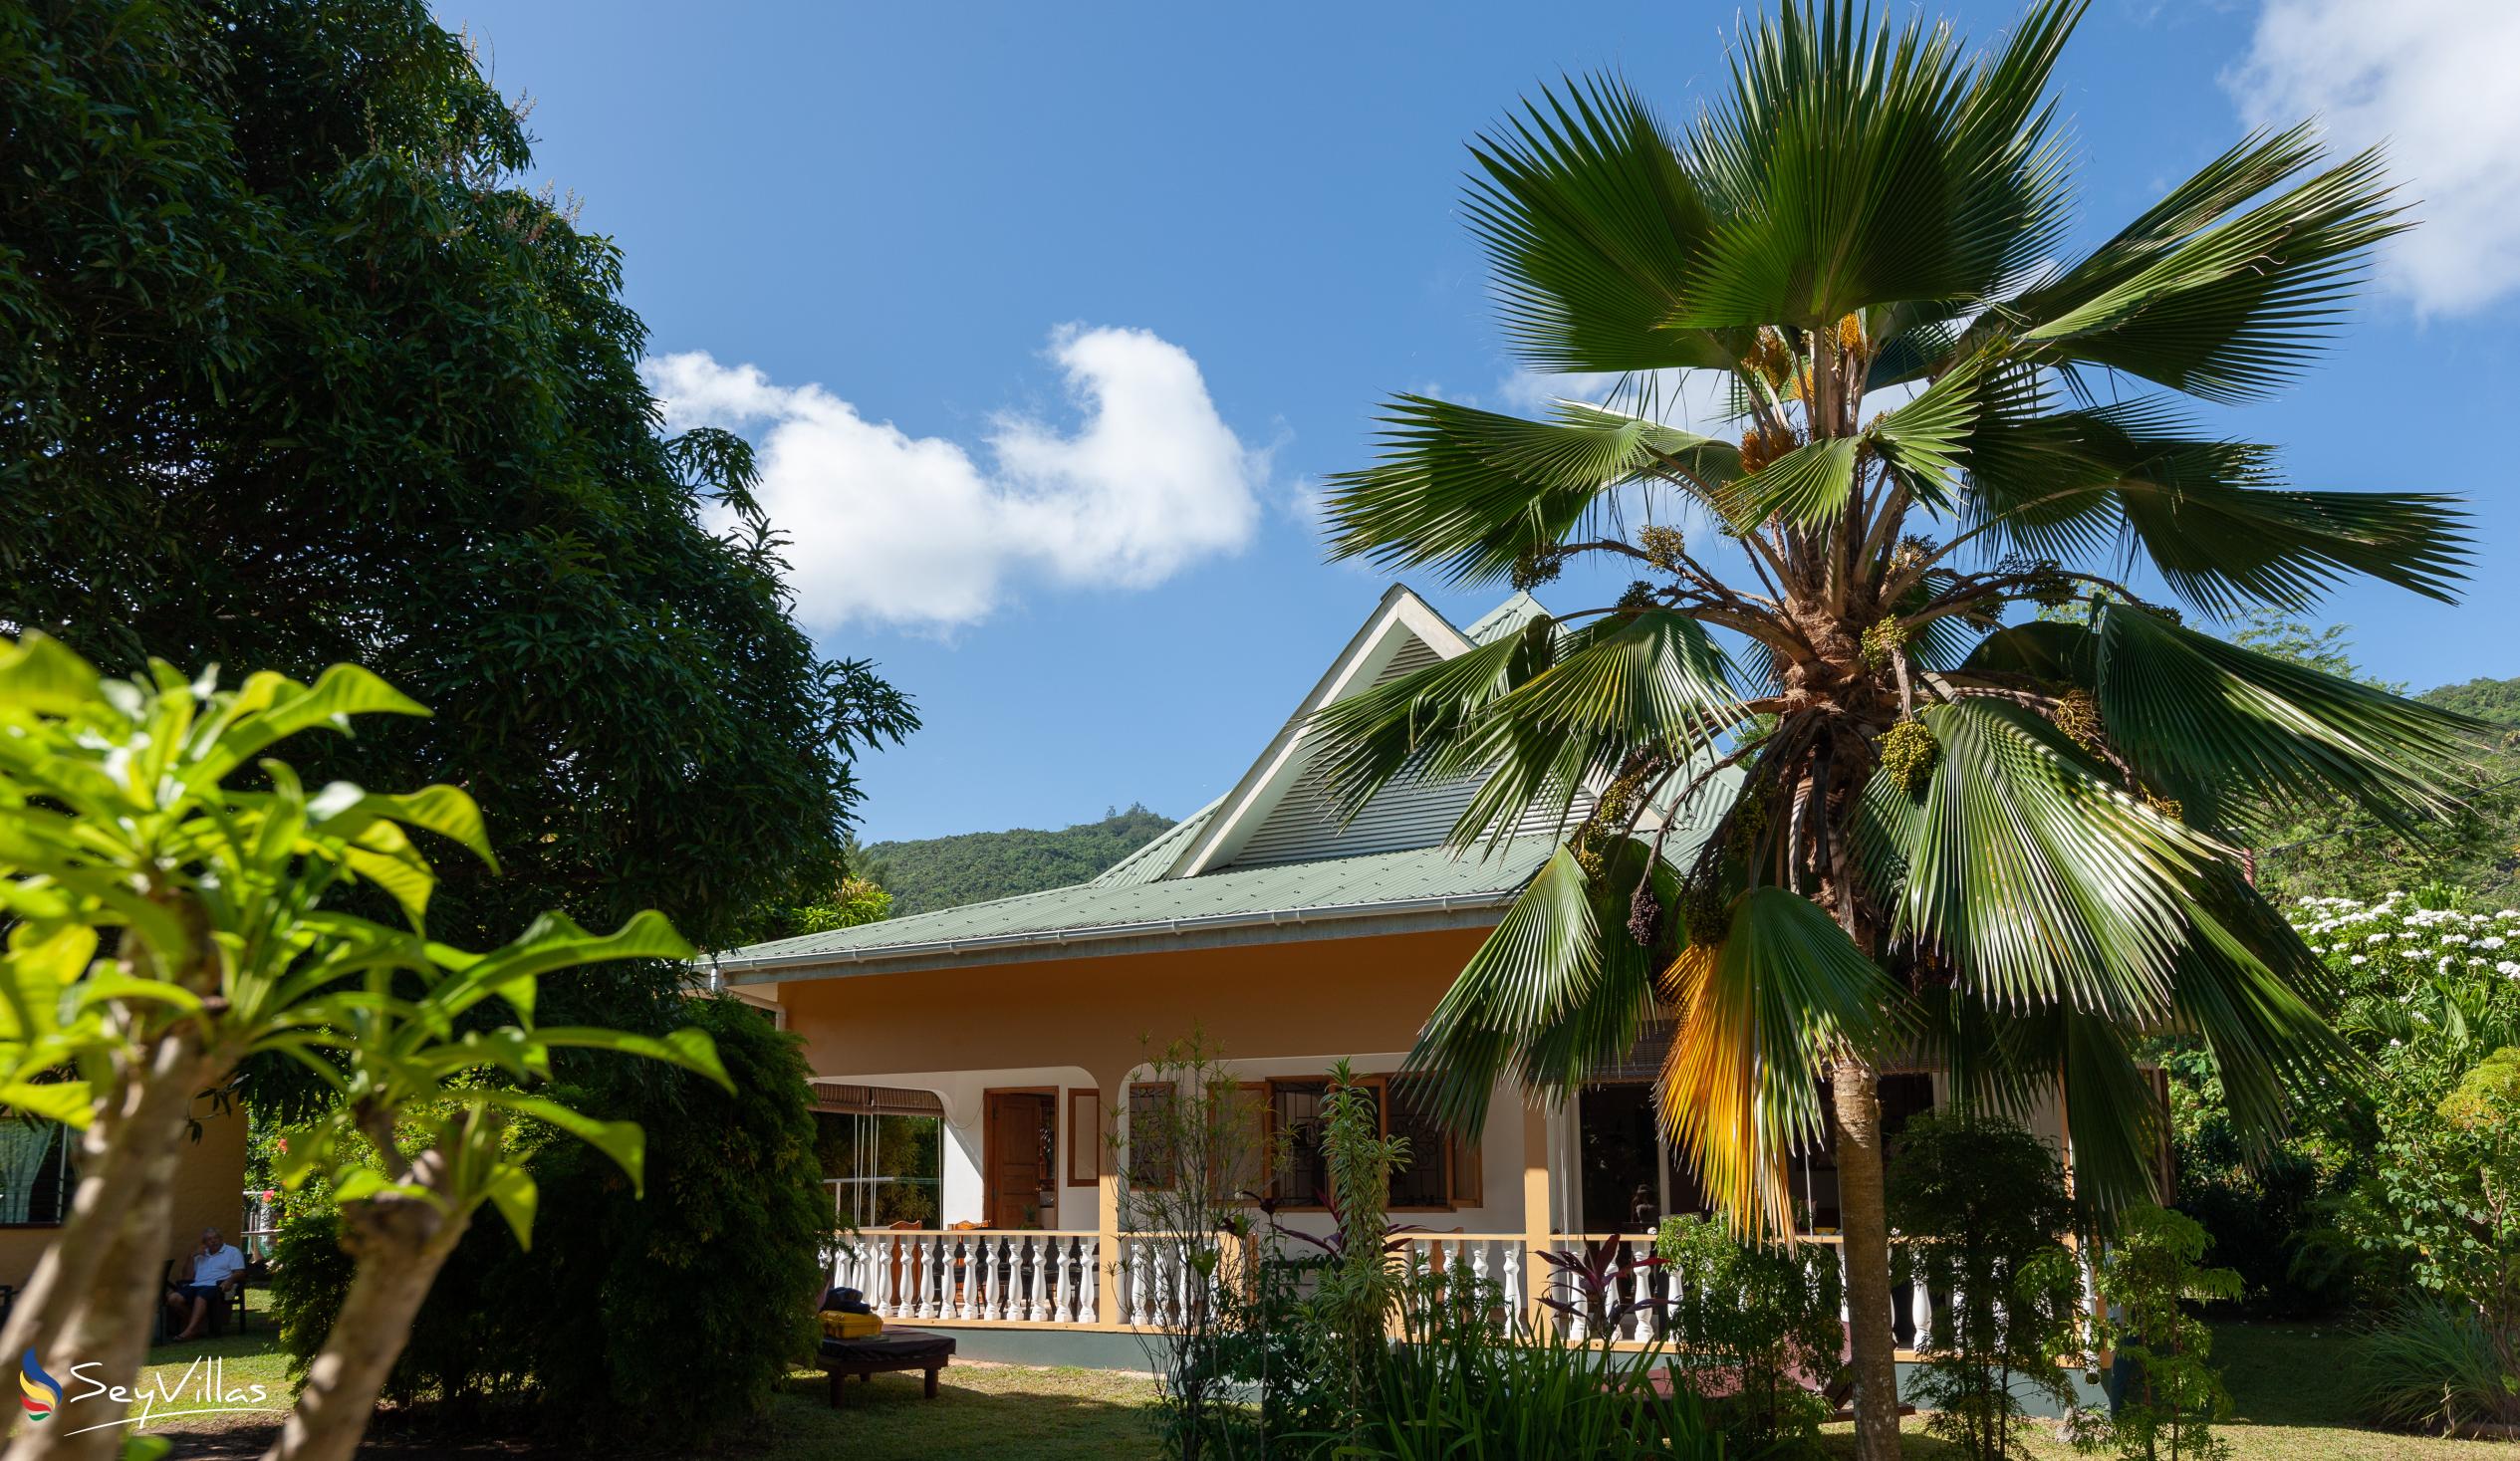 Photo 3: Chez Marlin - Outdoor area - Praslin (Seychelles)